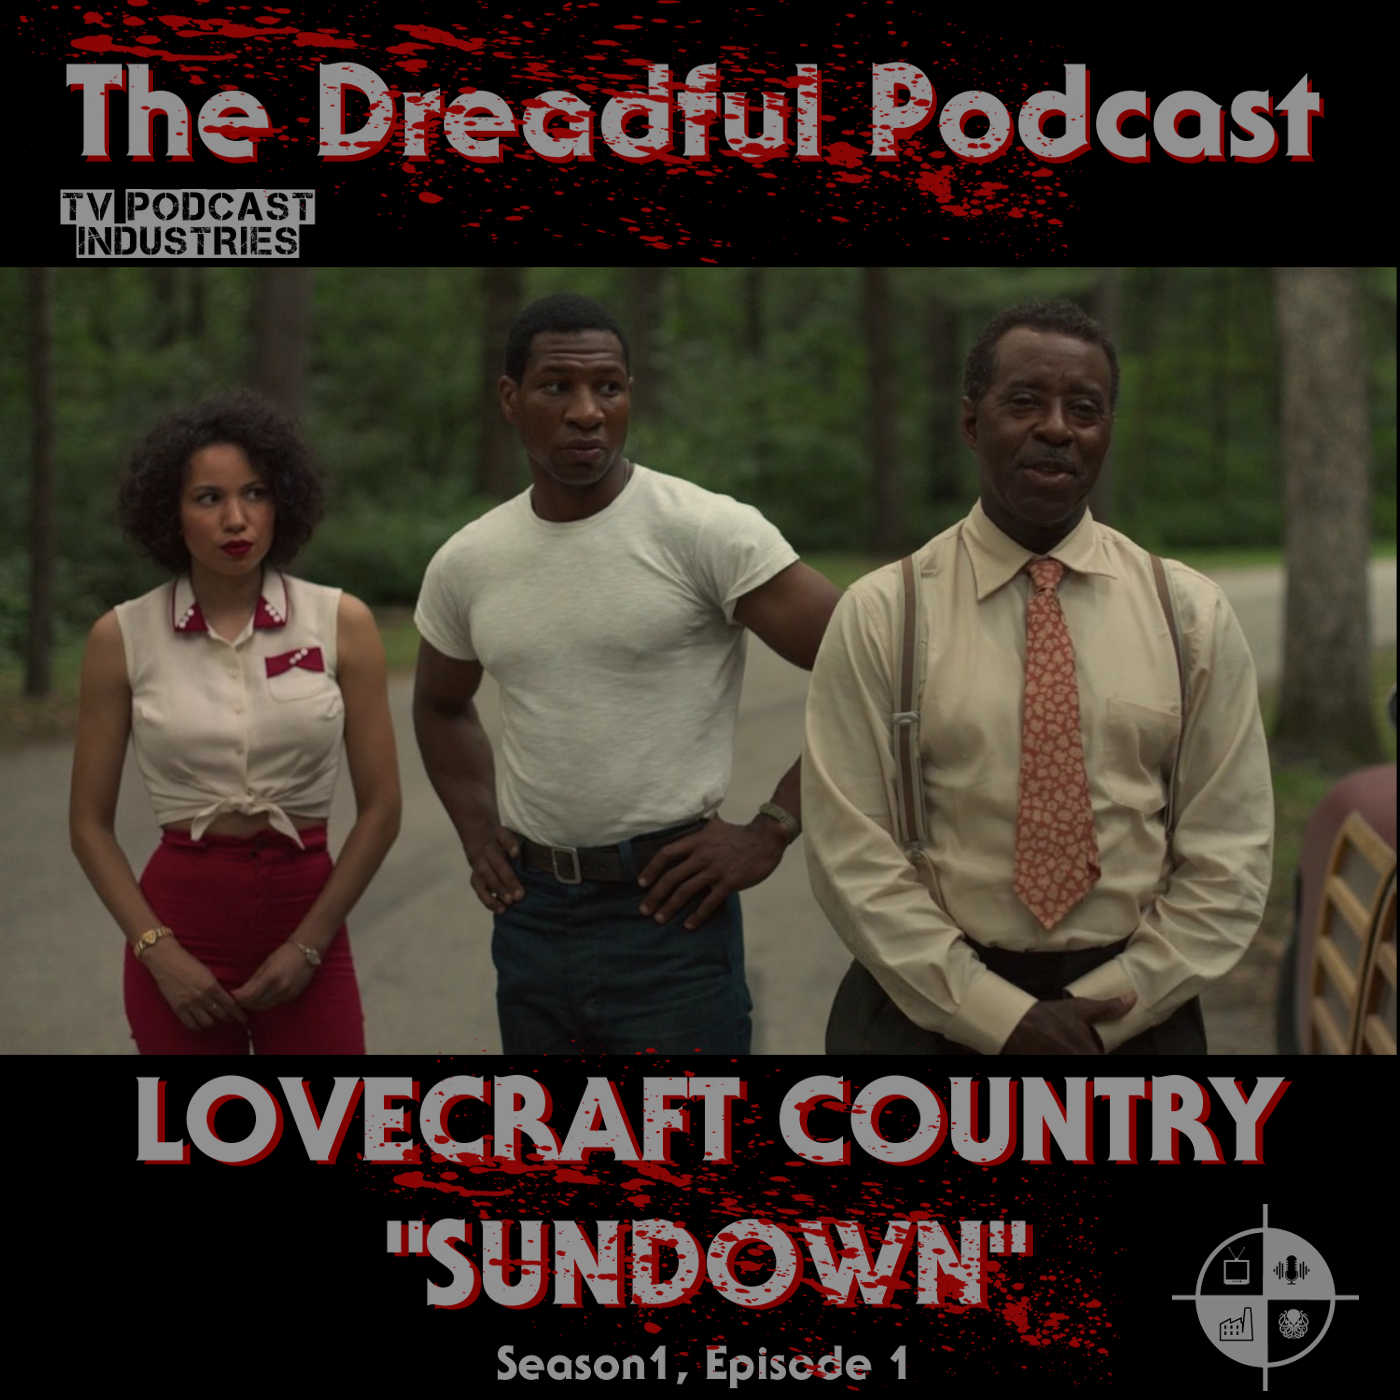 Lovecraft Country Episode 1 “Sundown” Podcast